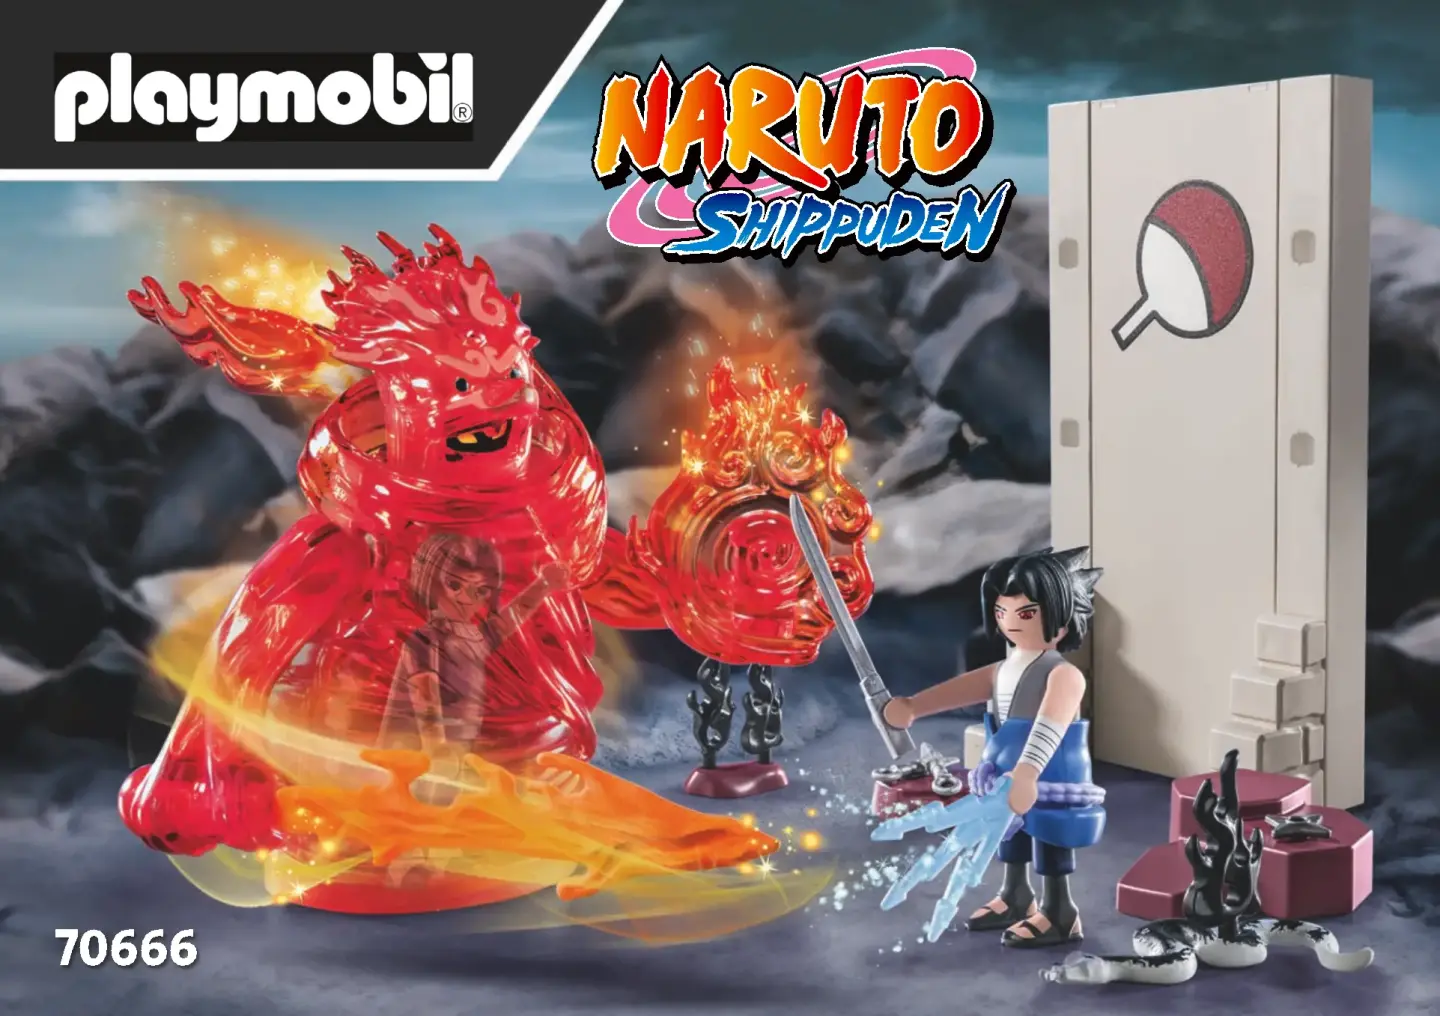 Playmobil Naruto Sage of the Six Paths Mode